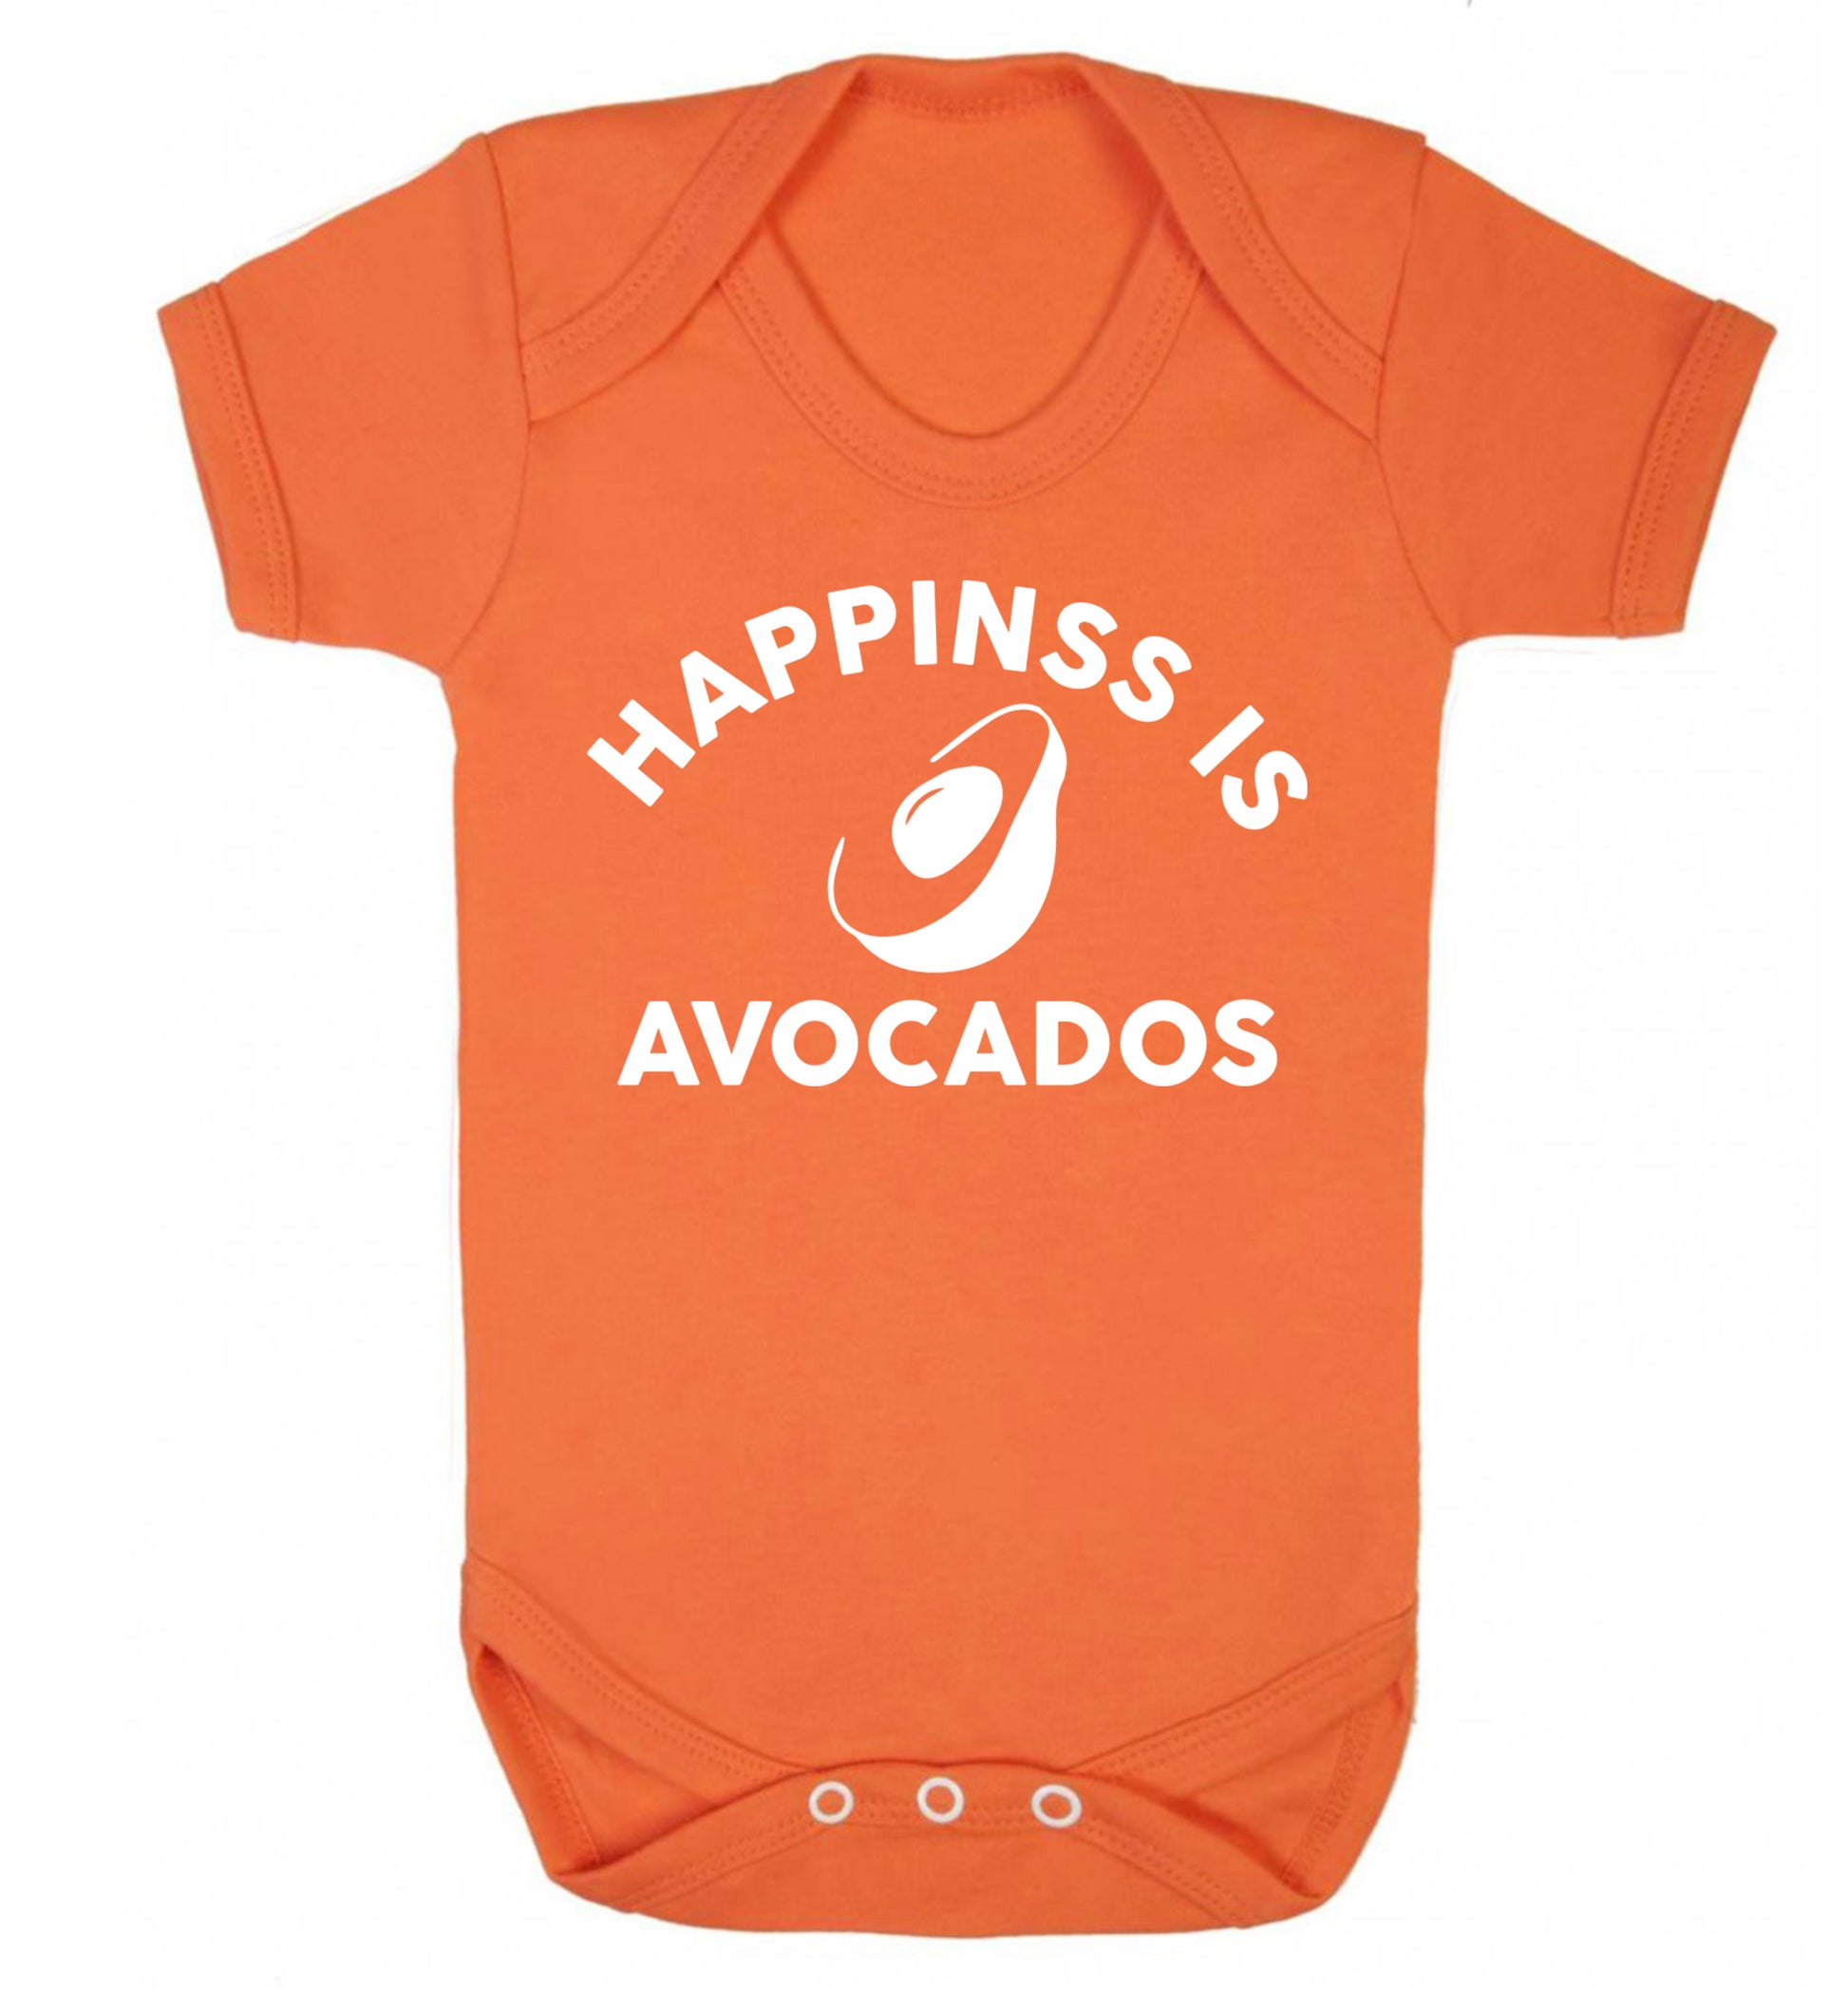 Happiness is avocados Baby Vest orange 18-24 months